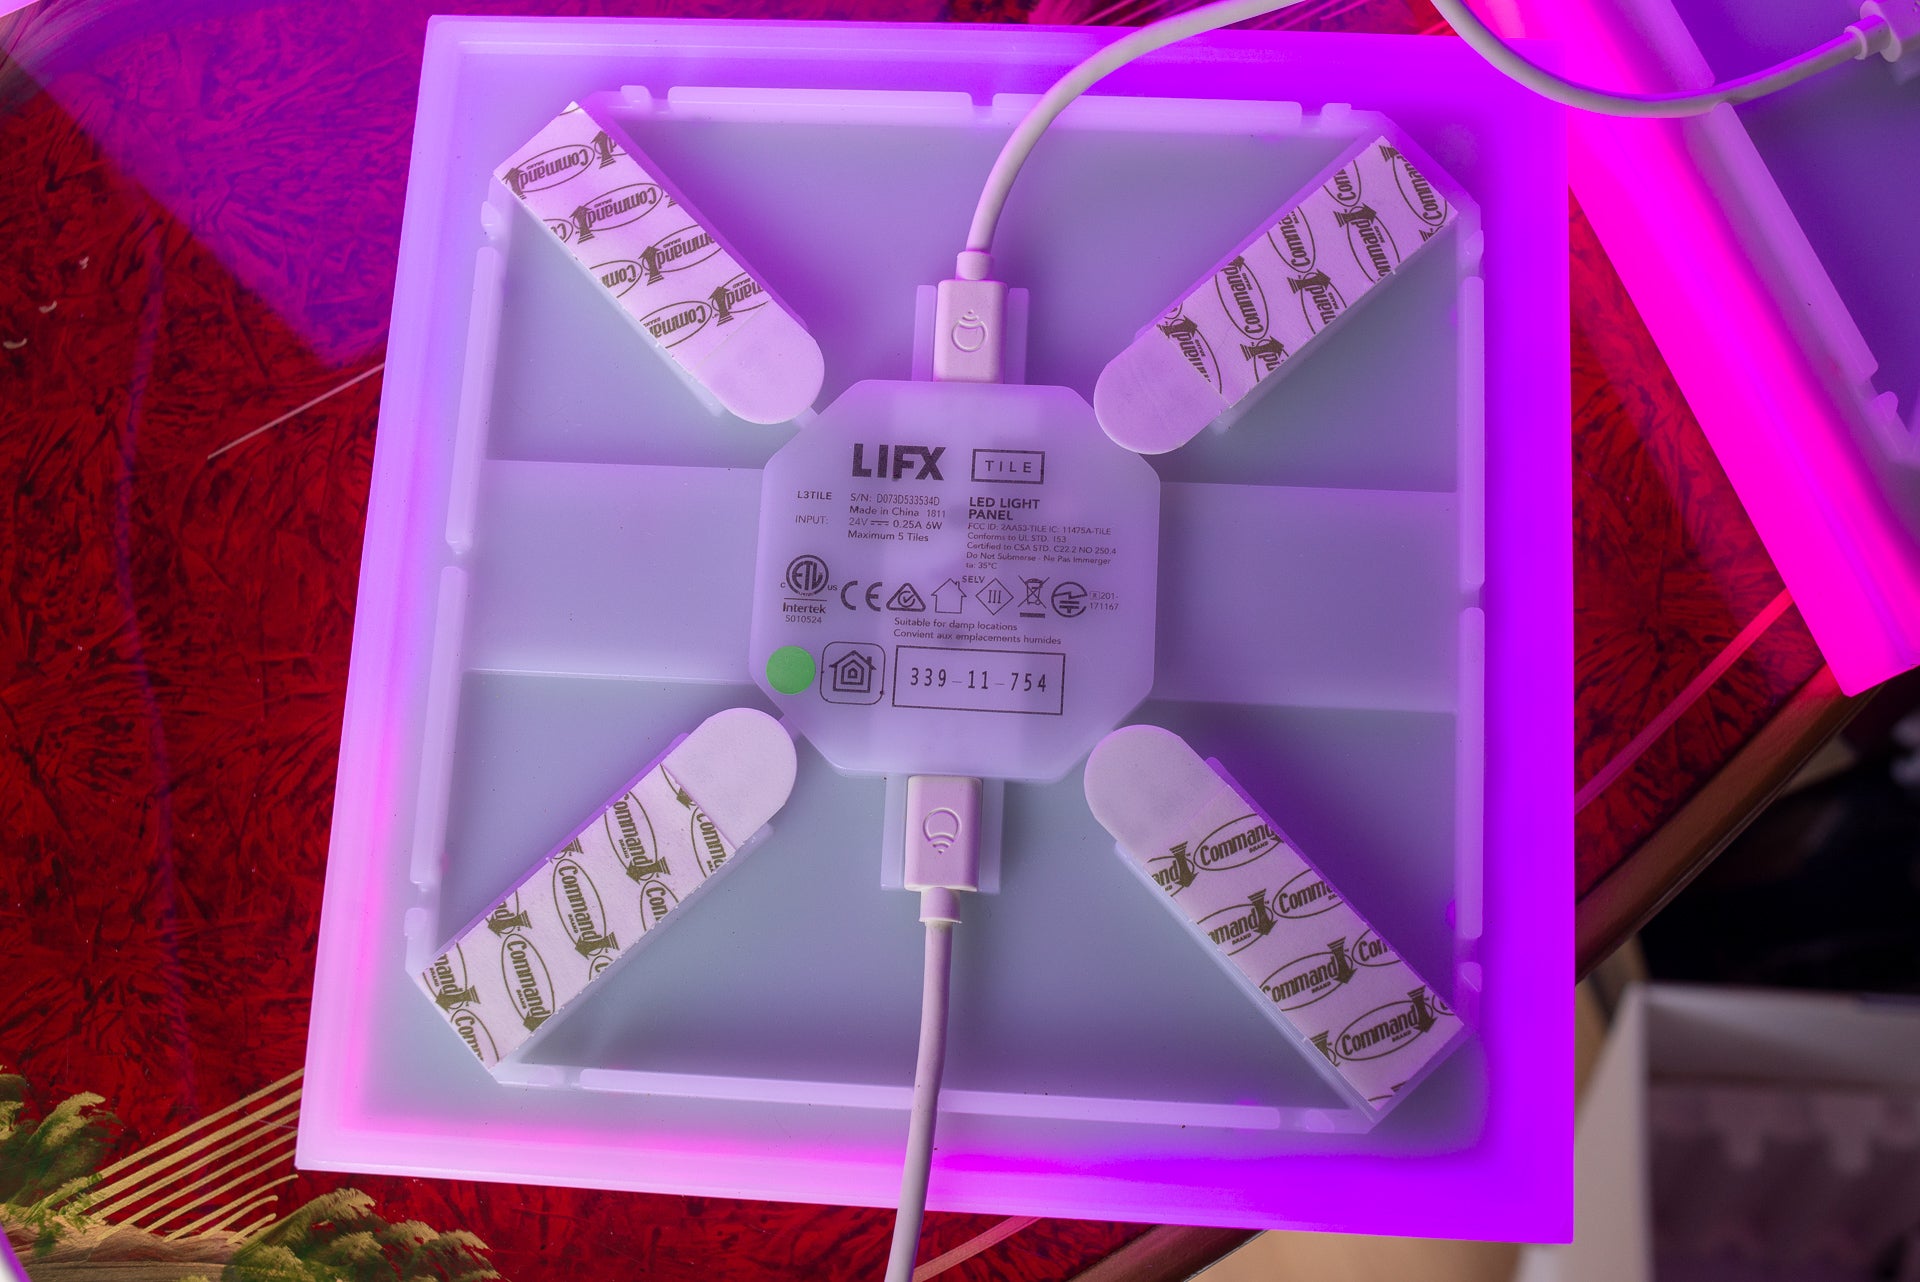 LIFX Tile LED light setup with colorful ambient lighting.